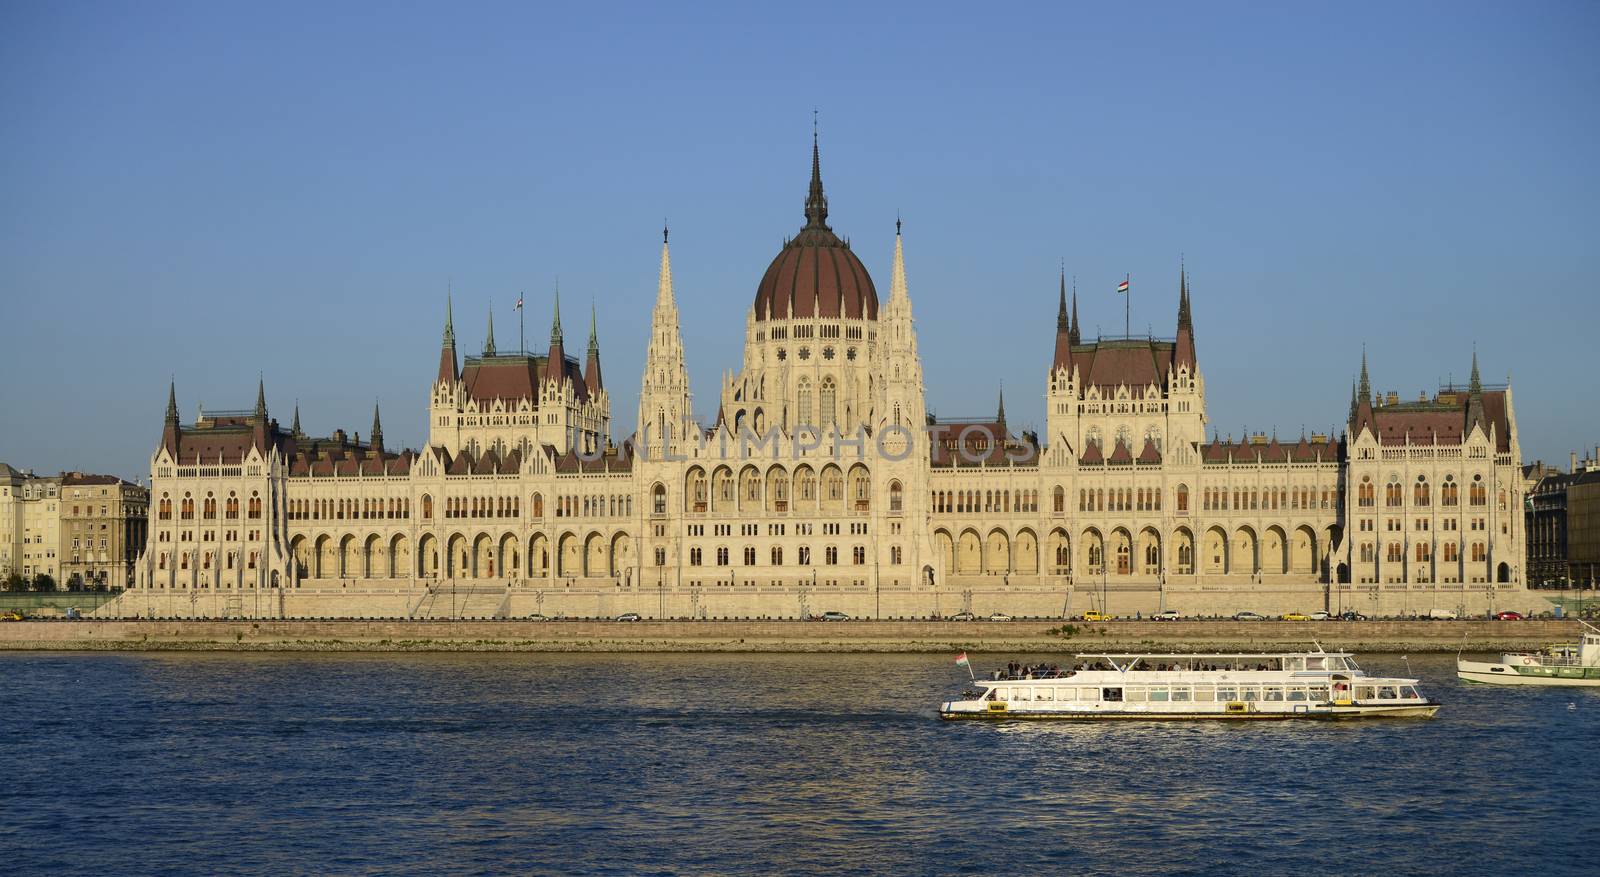 Budapest Parliament Building by tony4urban